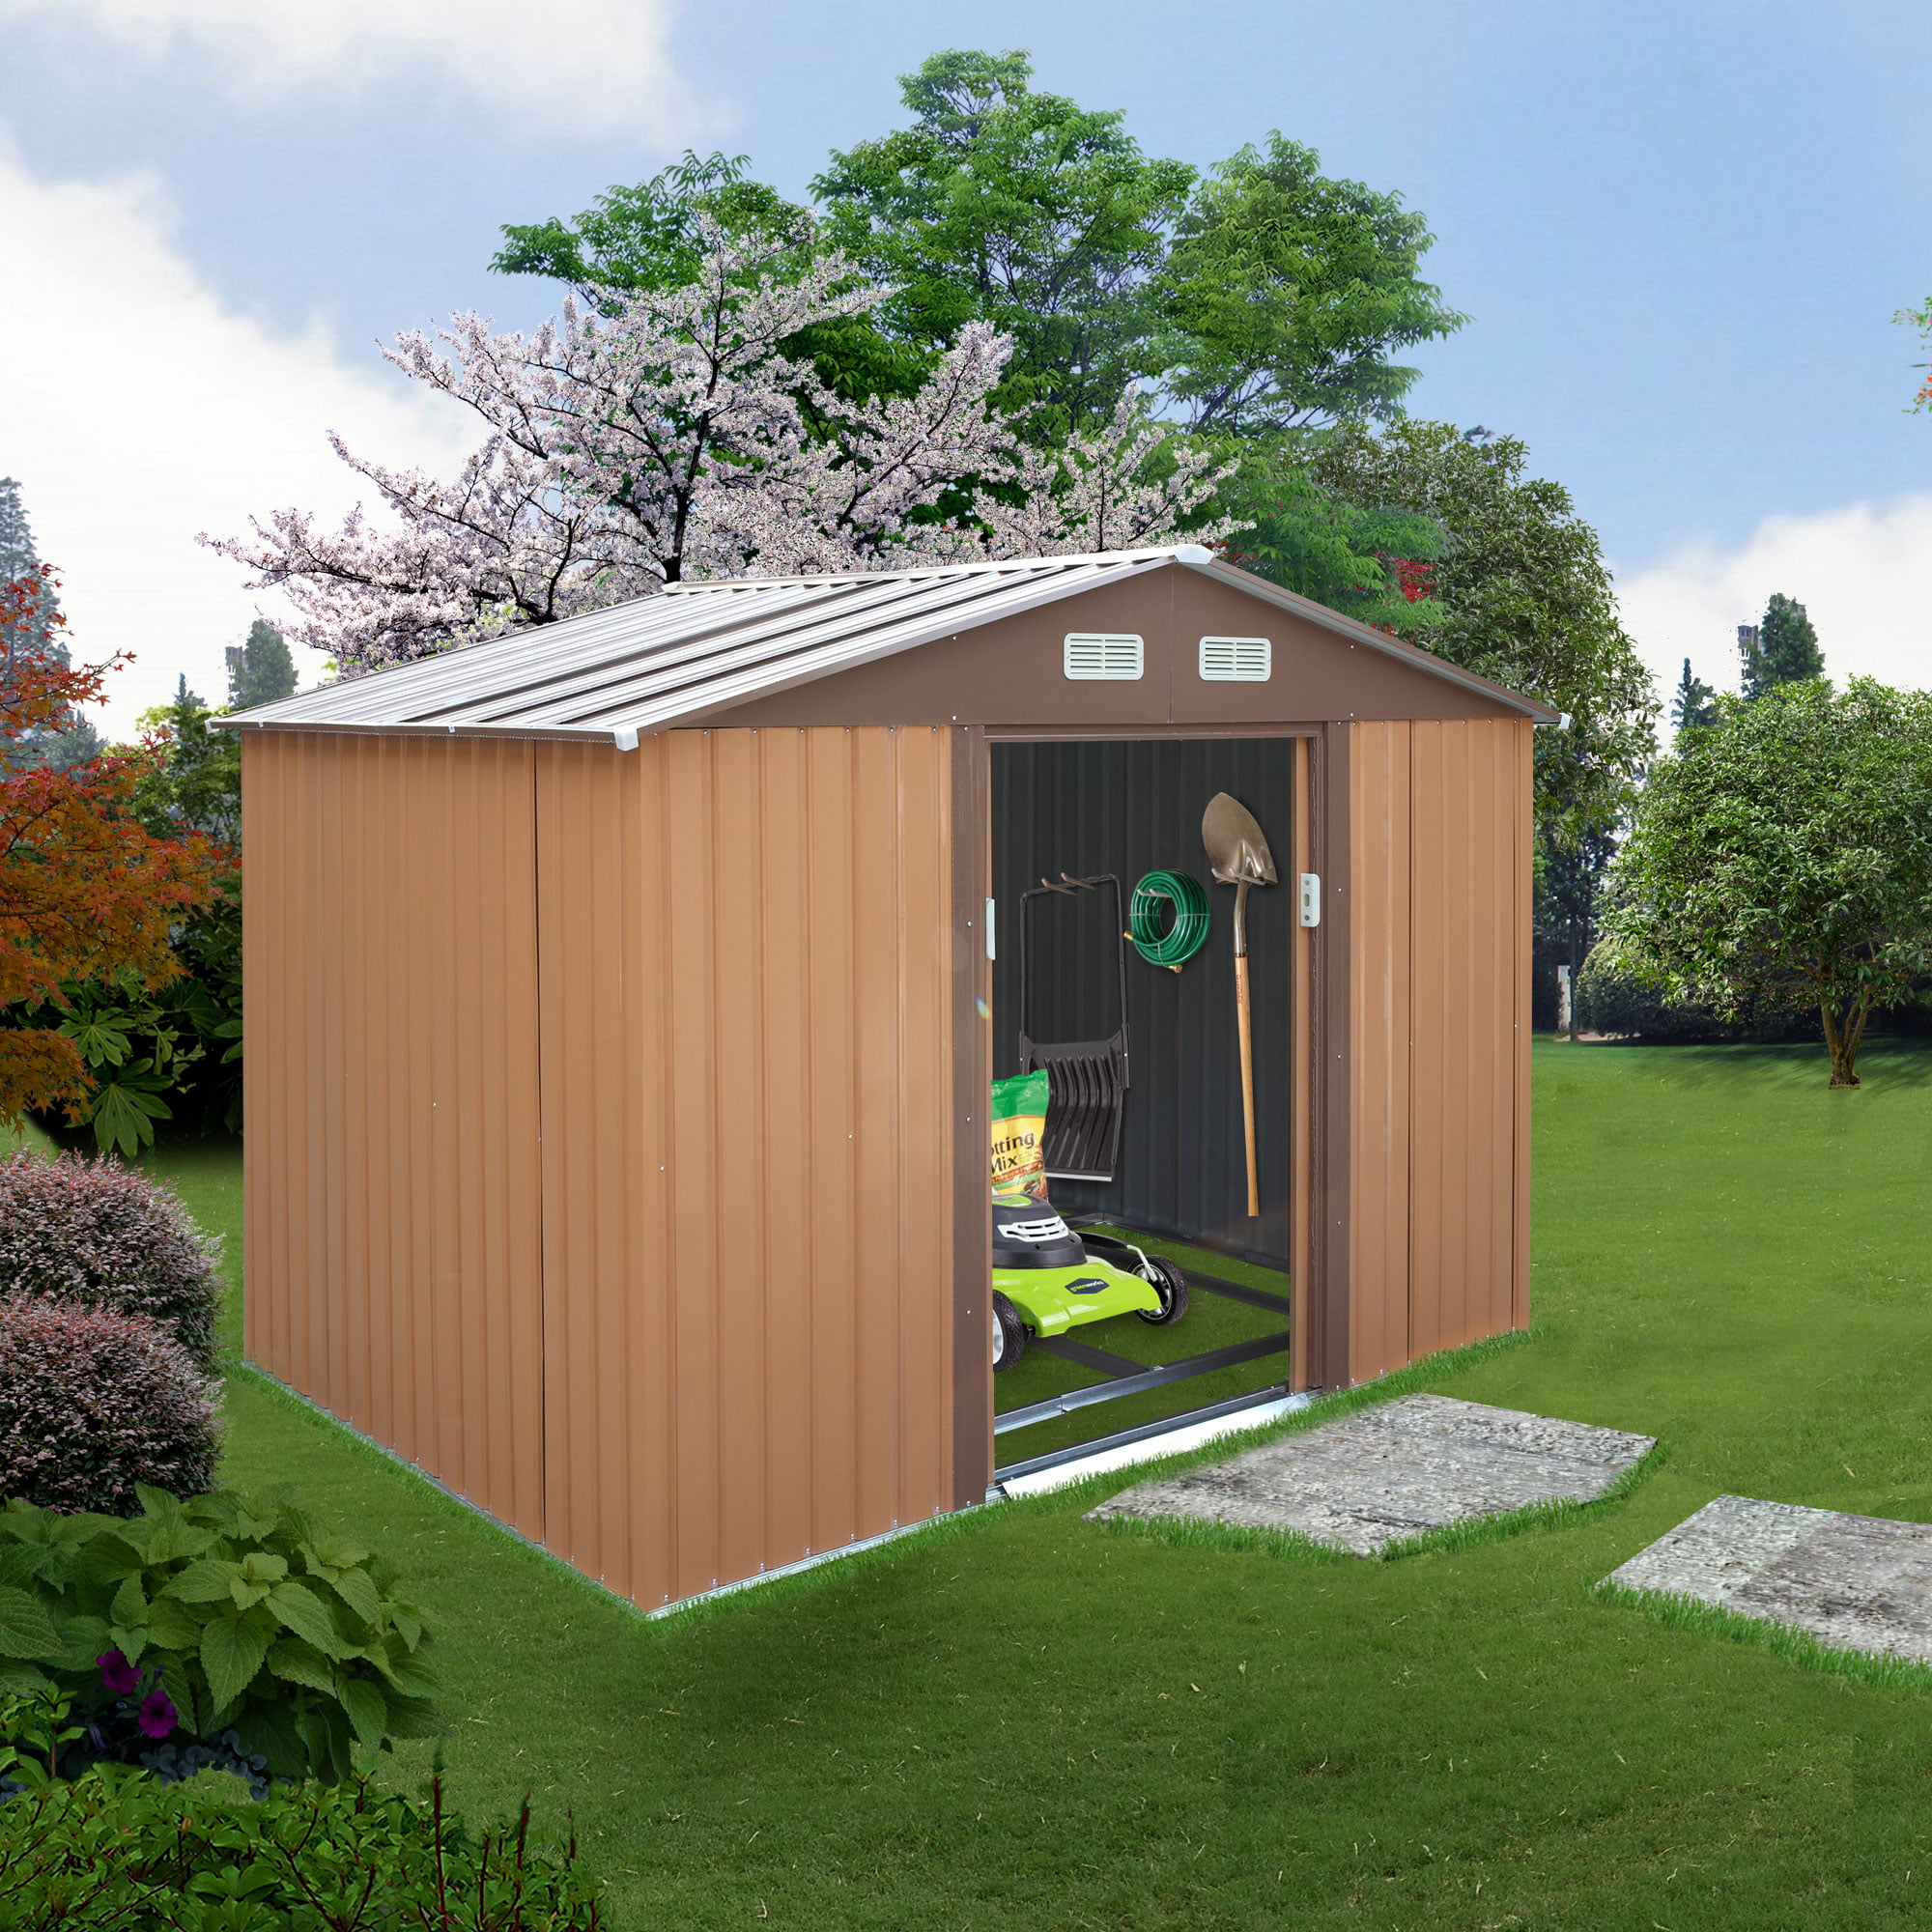 jaxpety 9' x 6' outdoor backyard garden metal storage shed